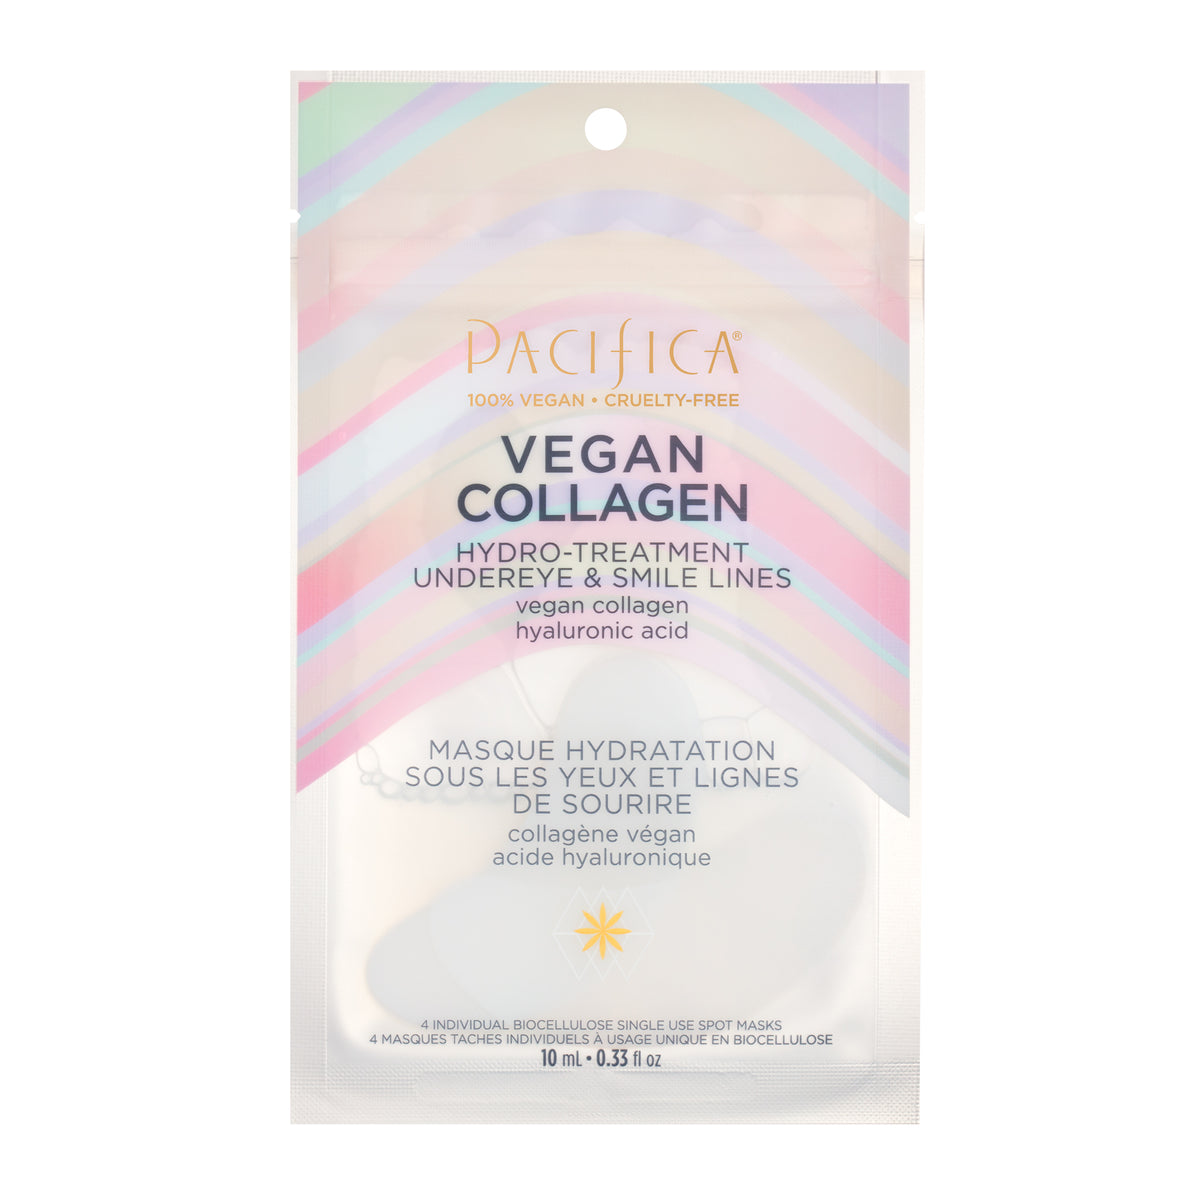 Vegan Collagen Hydro-Treatment Undereye & Smile Lines - 4pk - Skin Care - Pacifica Beauty